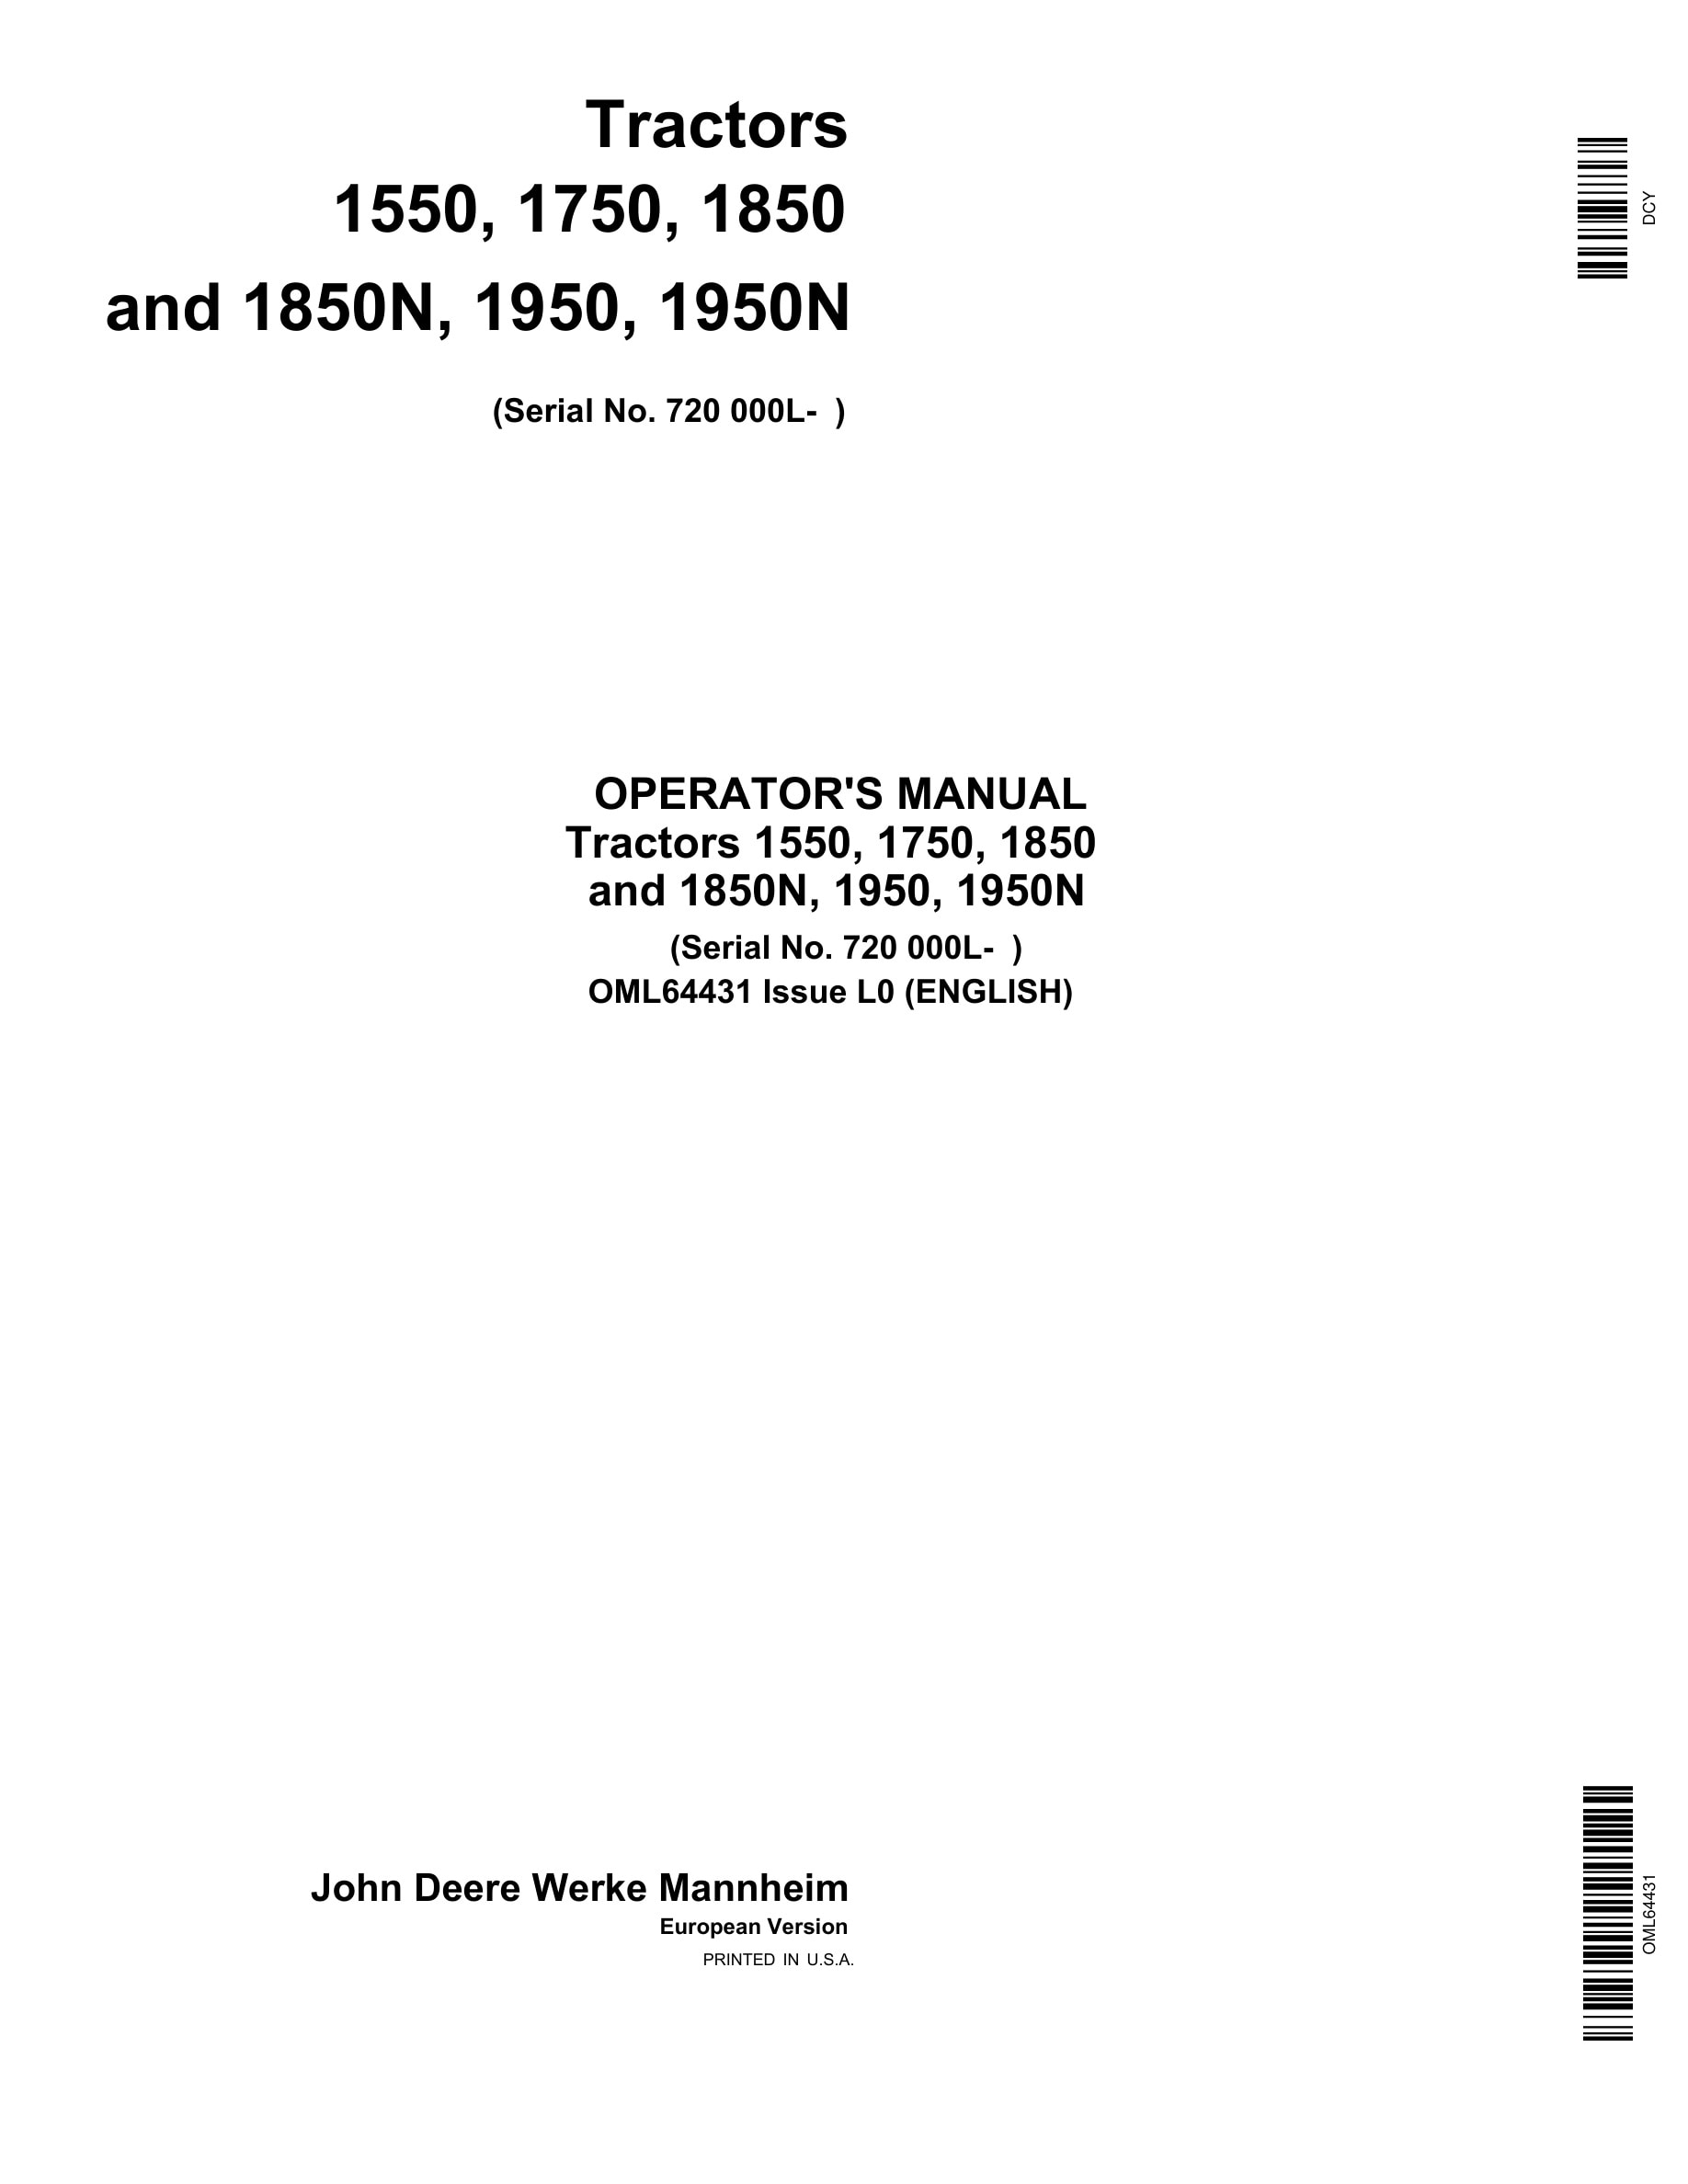 John Deere 1550, 1750, 1850 And 1850n, 1950, 1950n Tractors Operator Manuals OML64431-1